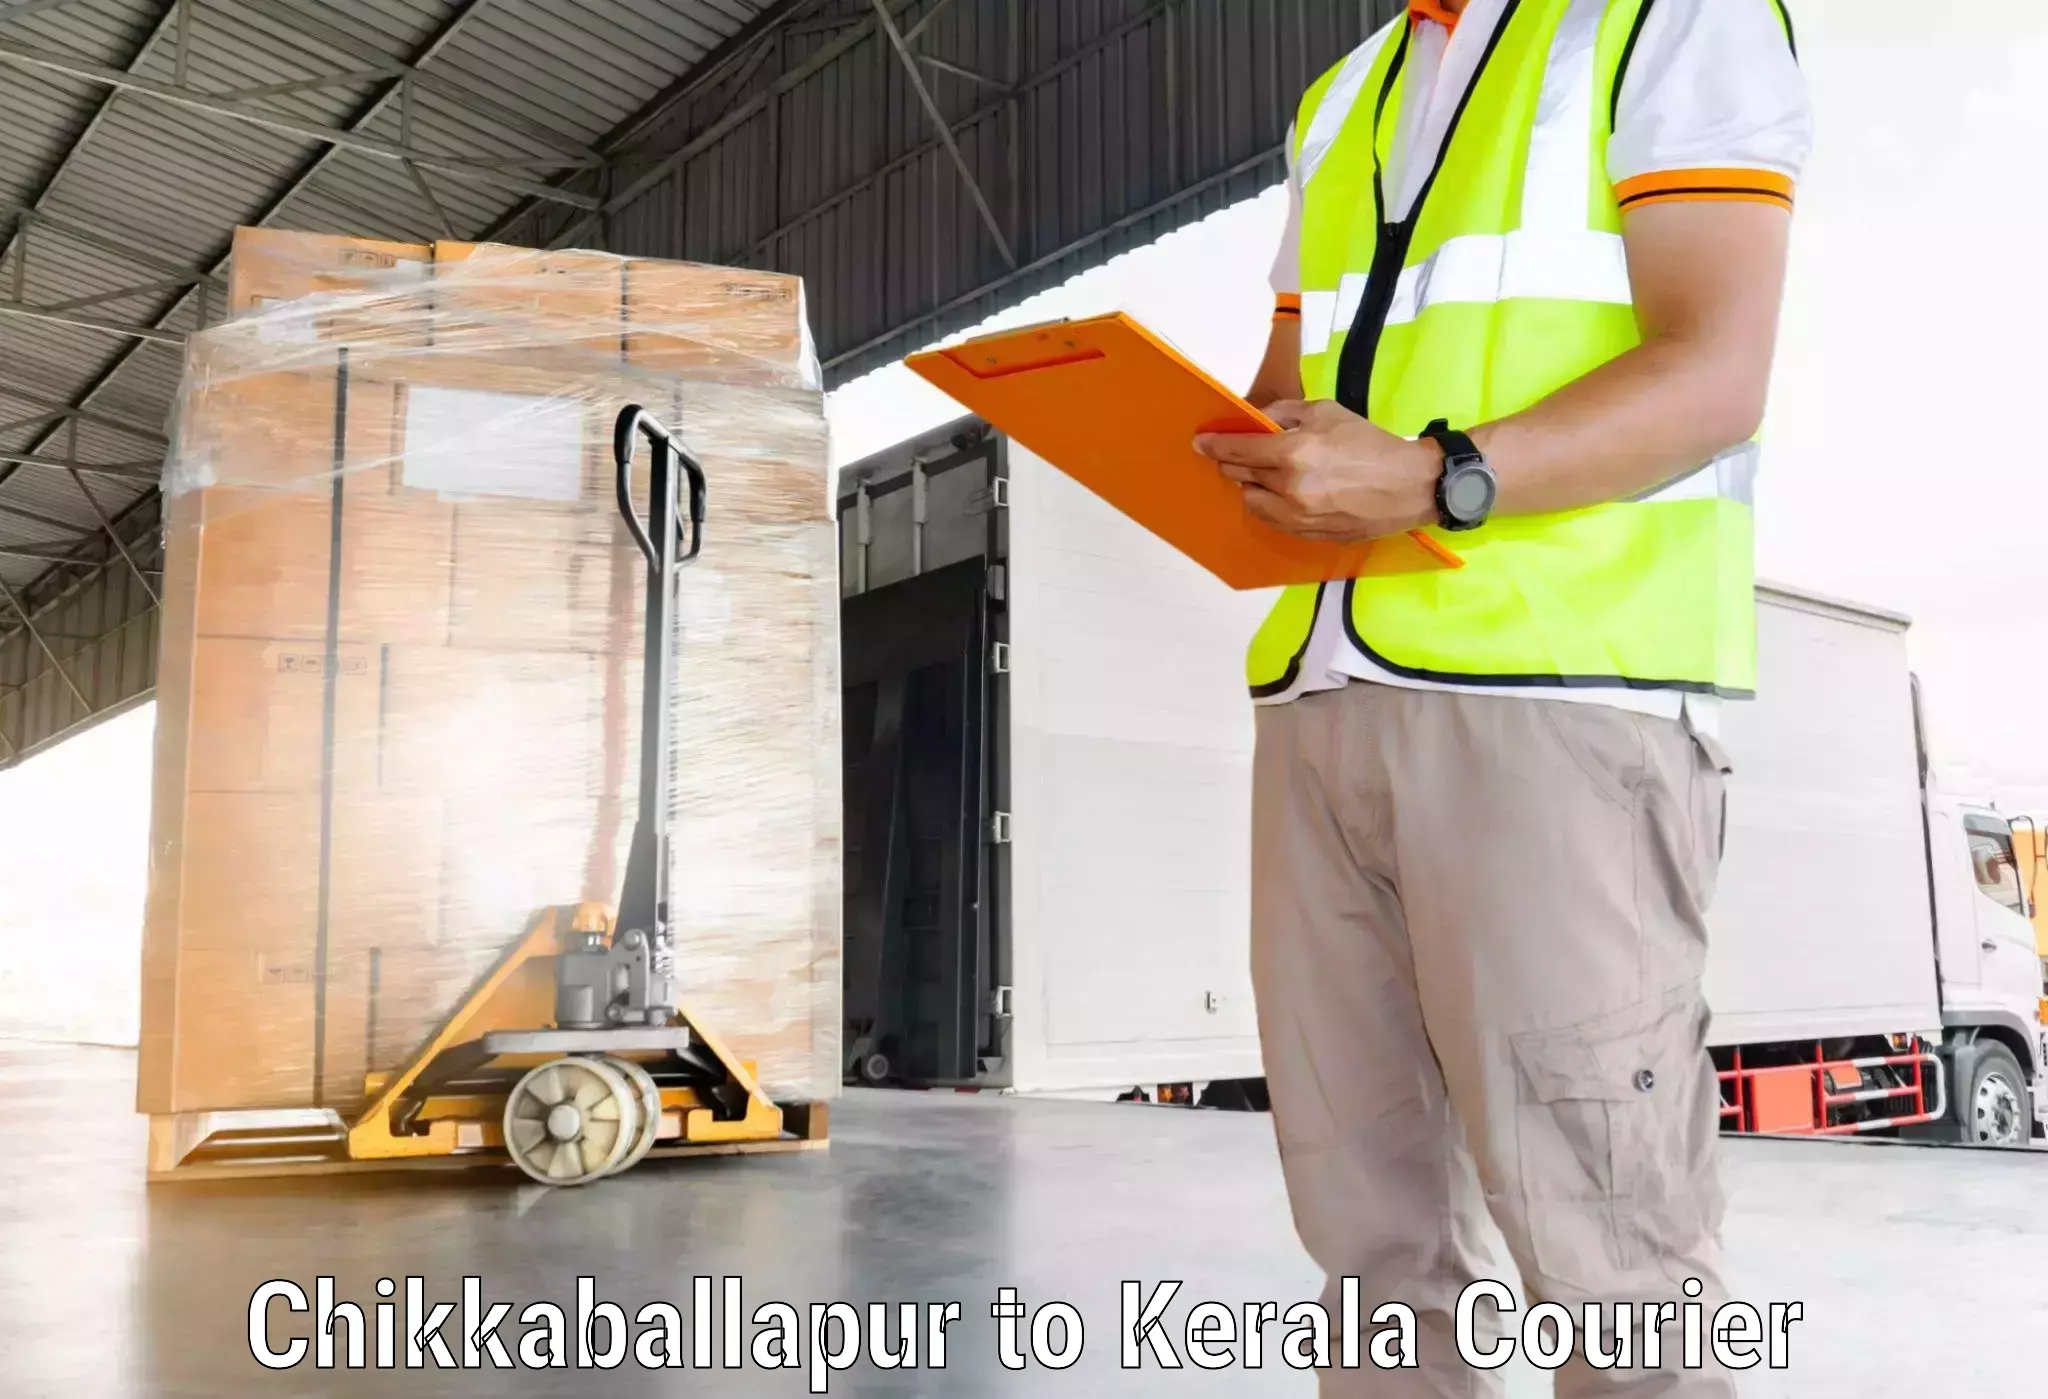 Delivery service partnership Chikkaballapur to Cochin Port Kochi